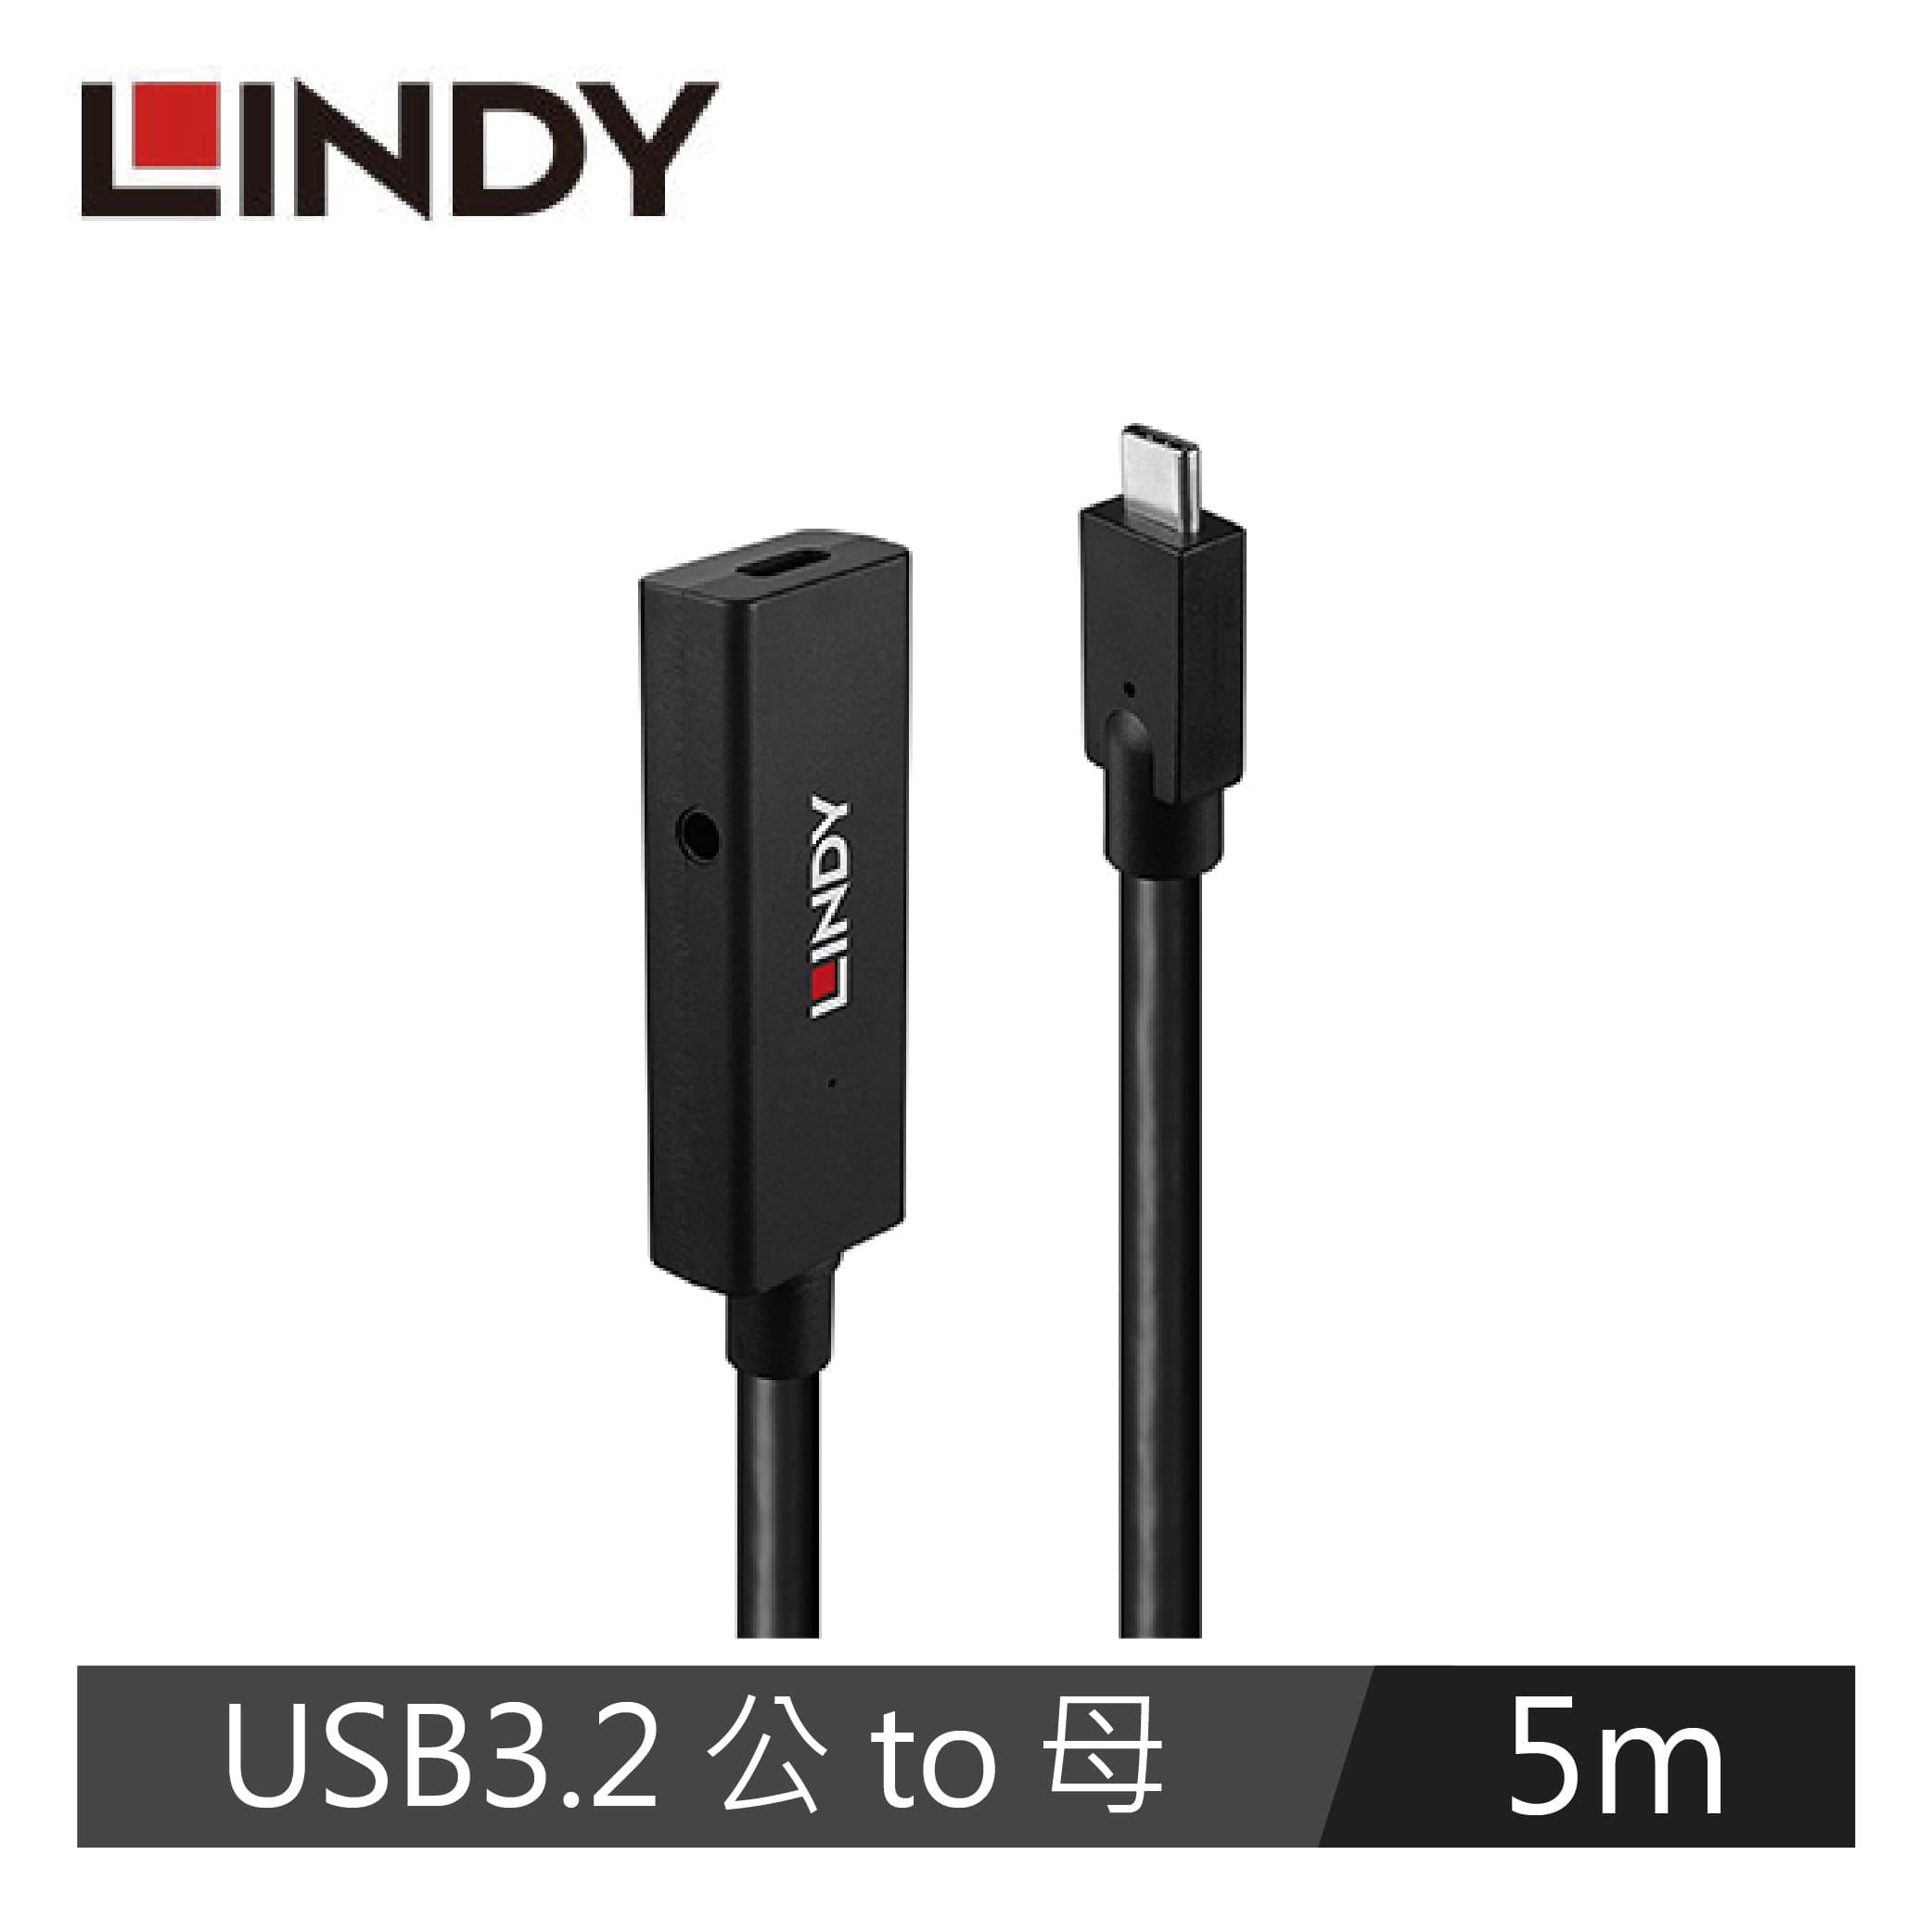 LINDY林帝 主動式 USB3.2 GEN2 純DATA TYPE-C 延長線, 5M